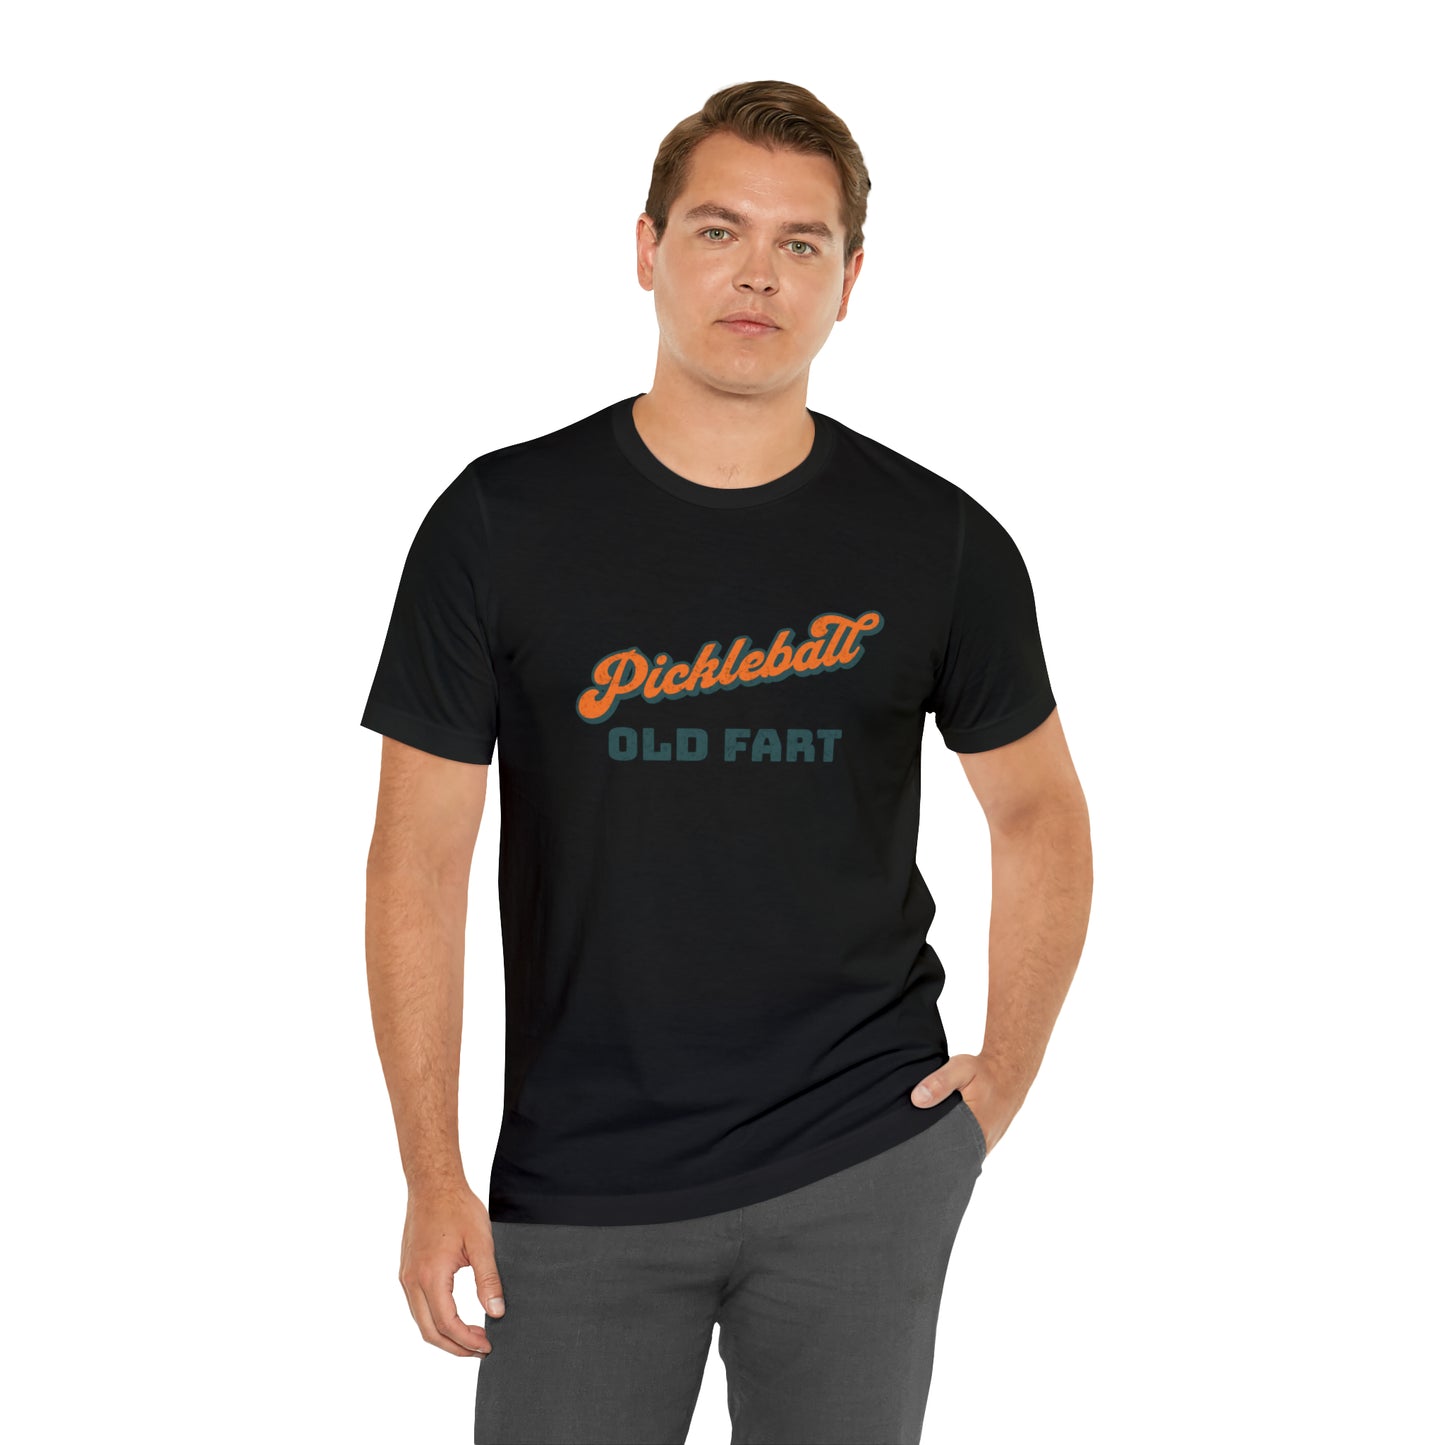 Pickler - Old Fart: Humorous Pickleball Cotton T-Shirt